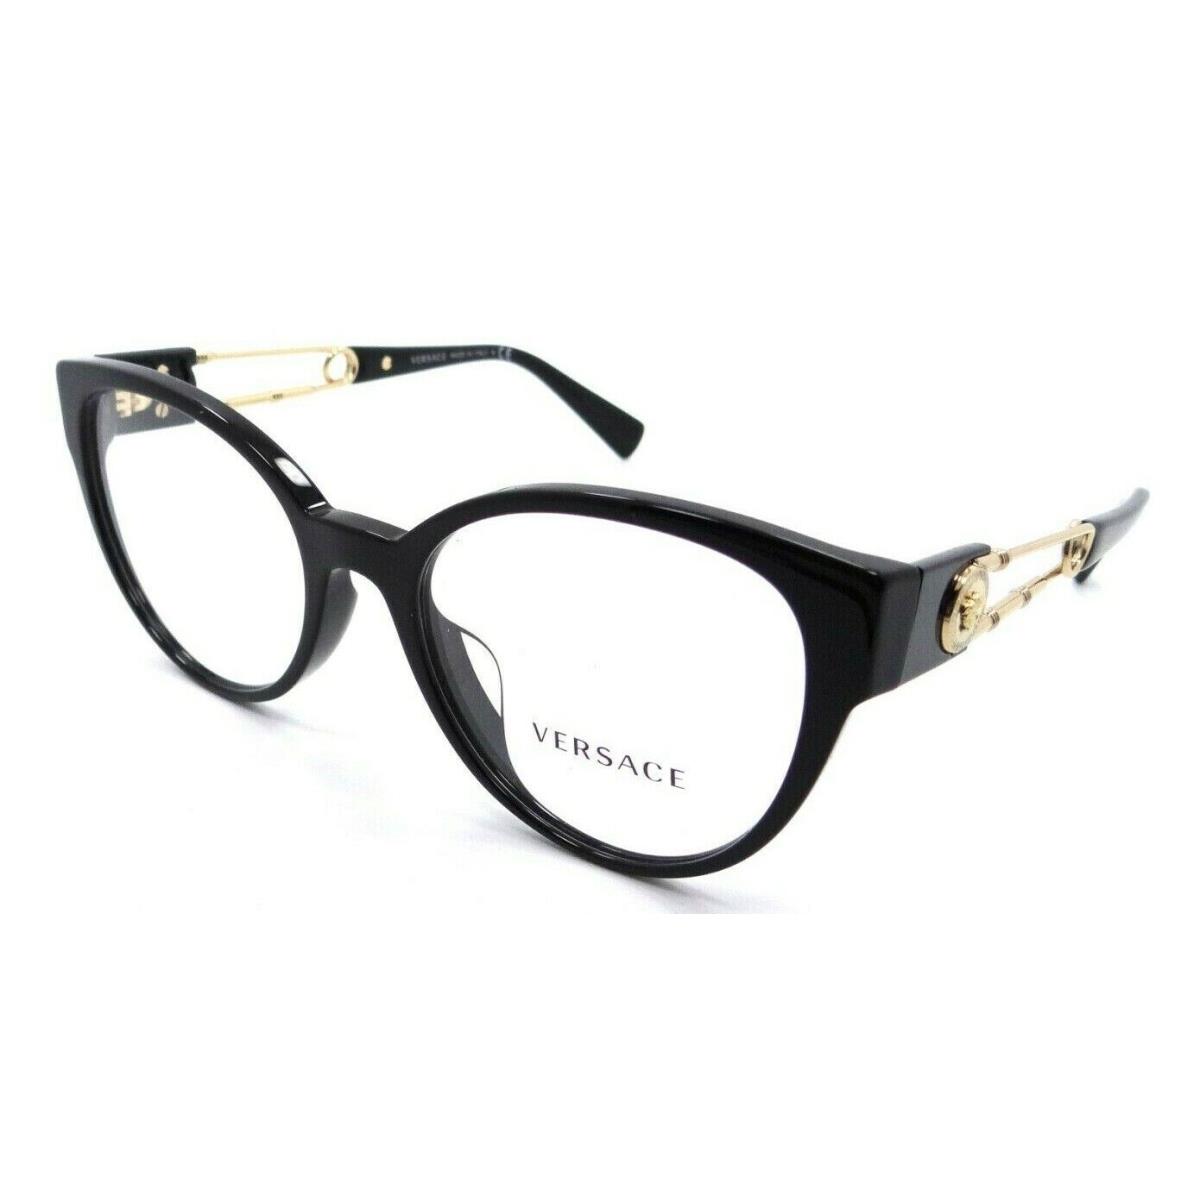 Versace Eyeglasses Frames VE 3307F GB1 54-19-140 Black Made in Italy